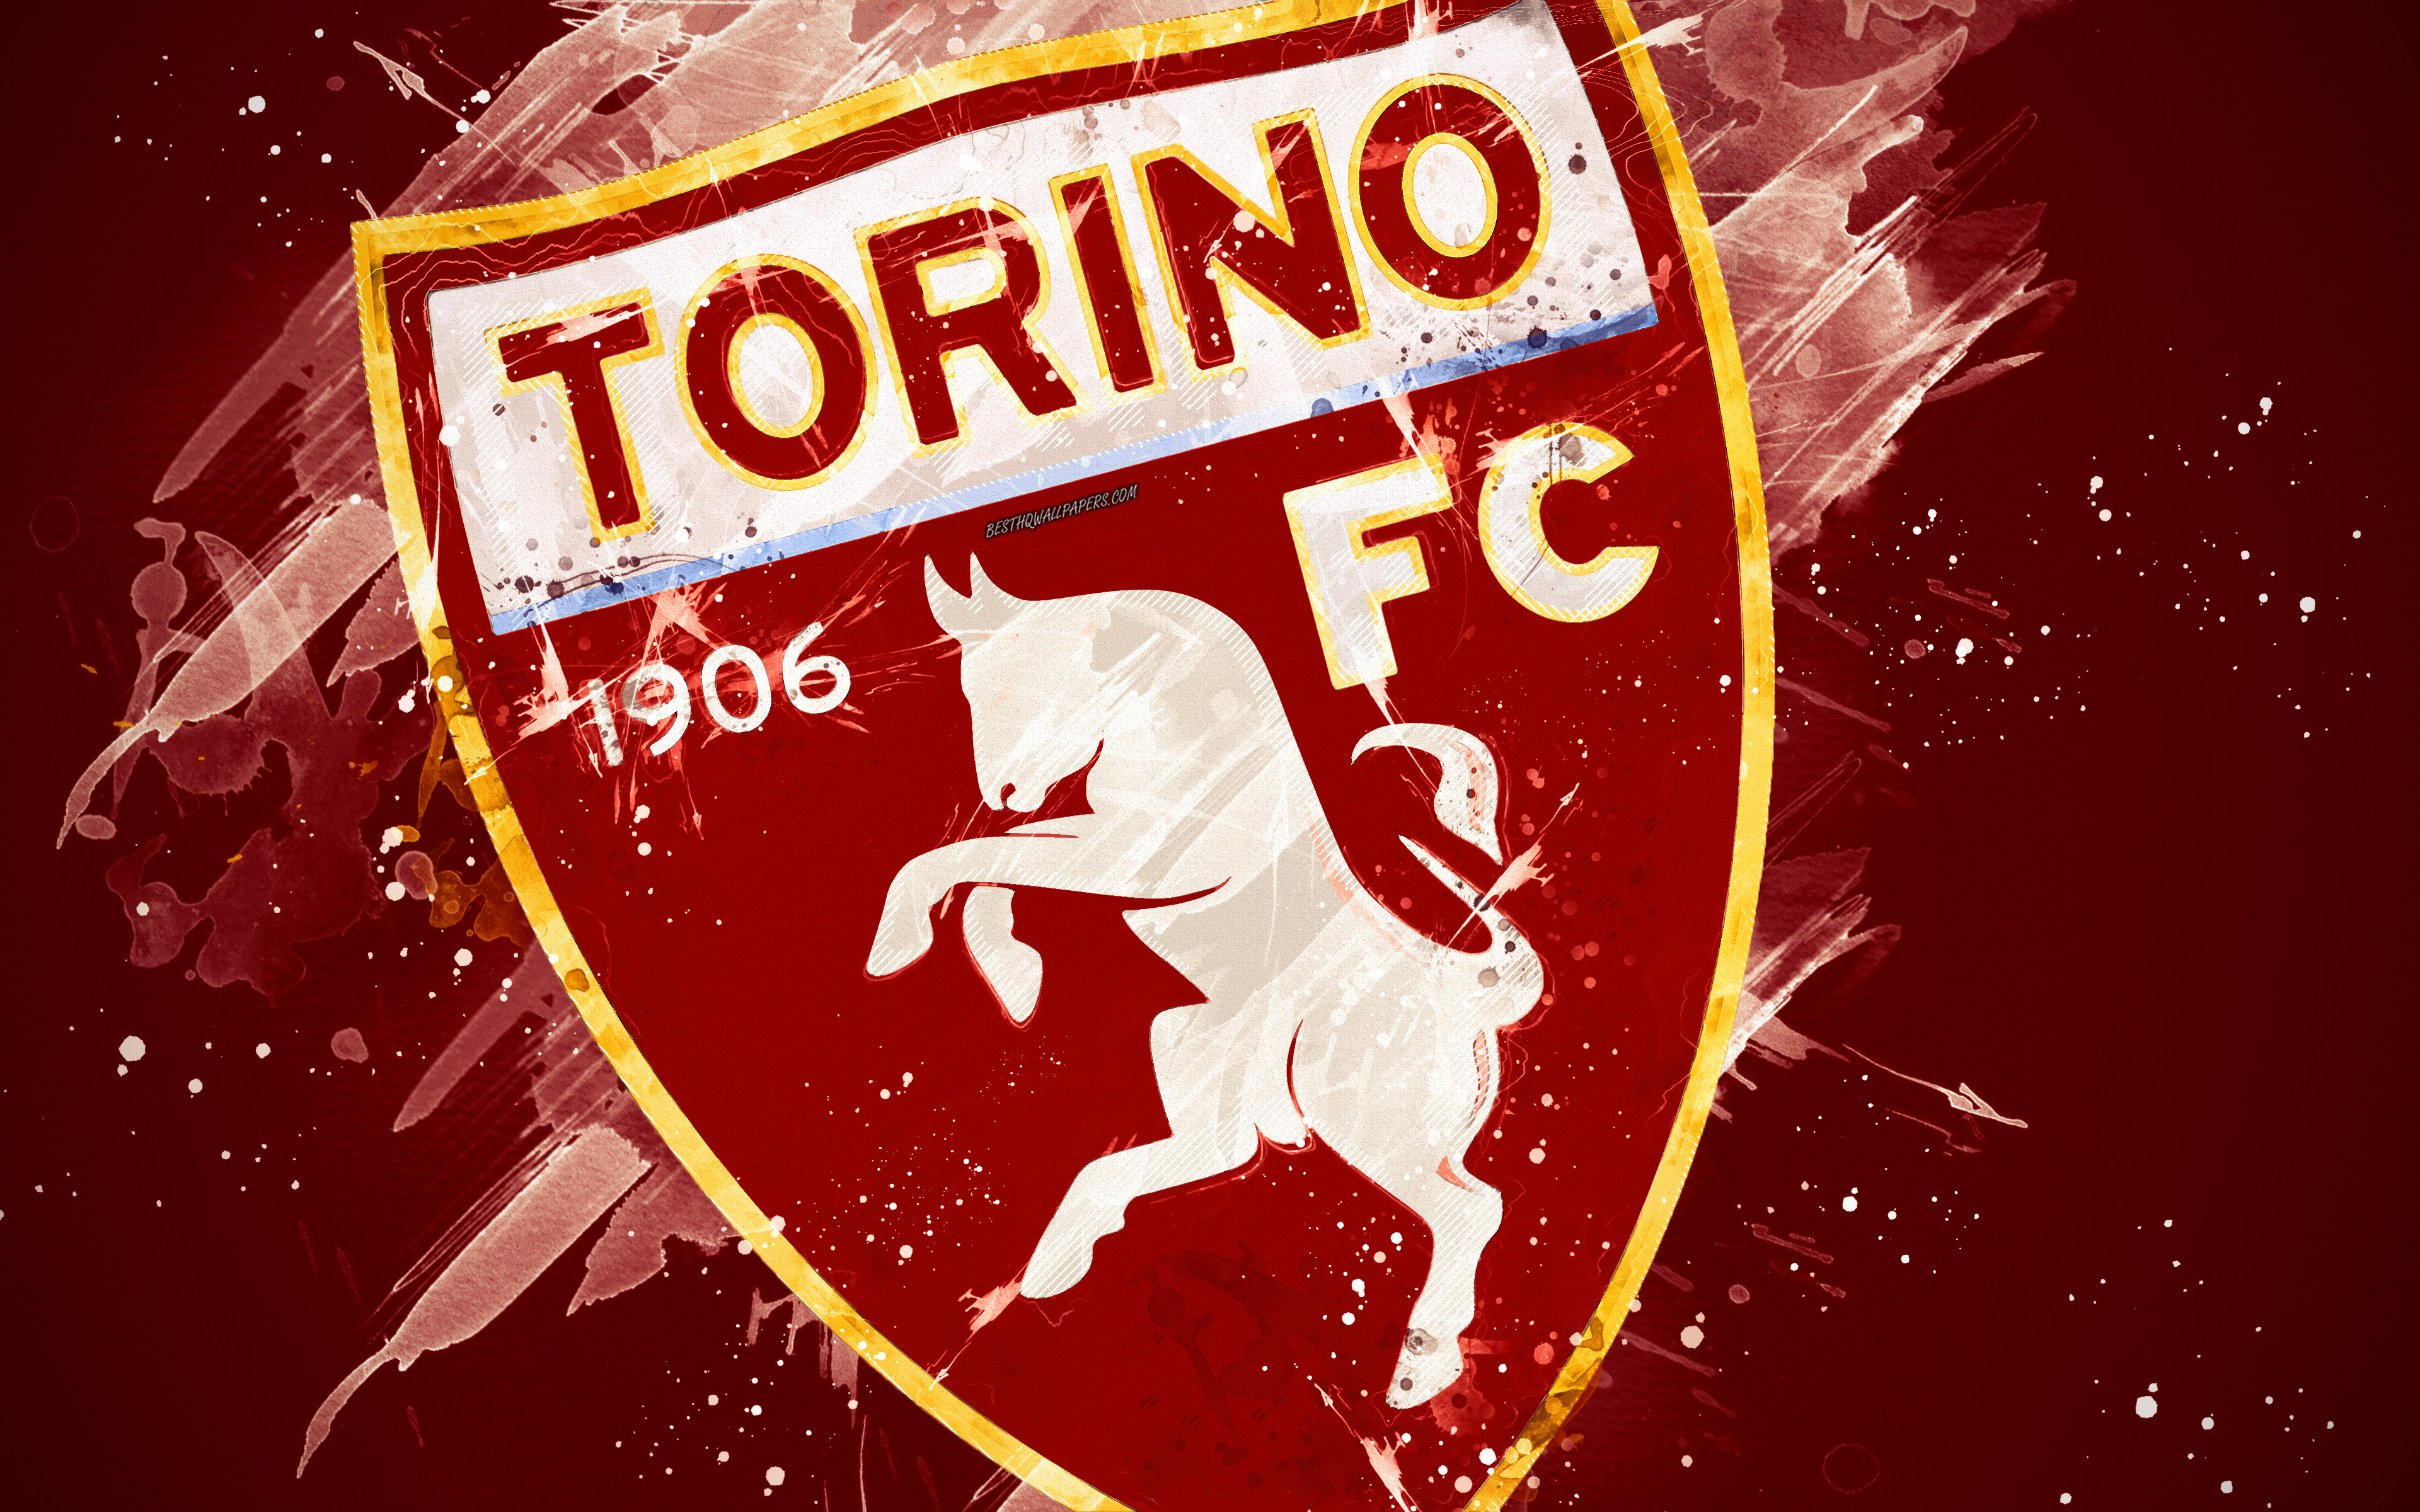 Download wallpaper Torino FC, 4k, paint art, creative, Italian